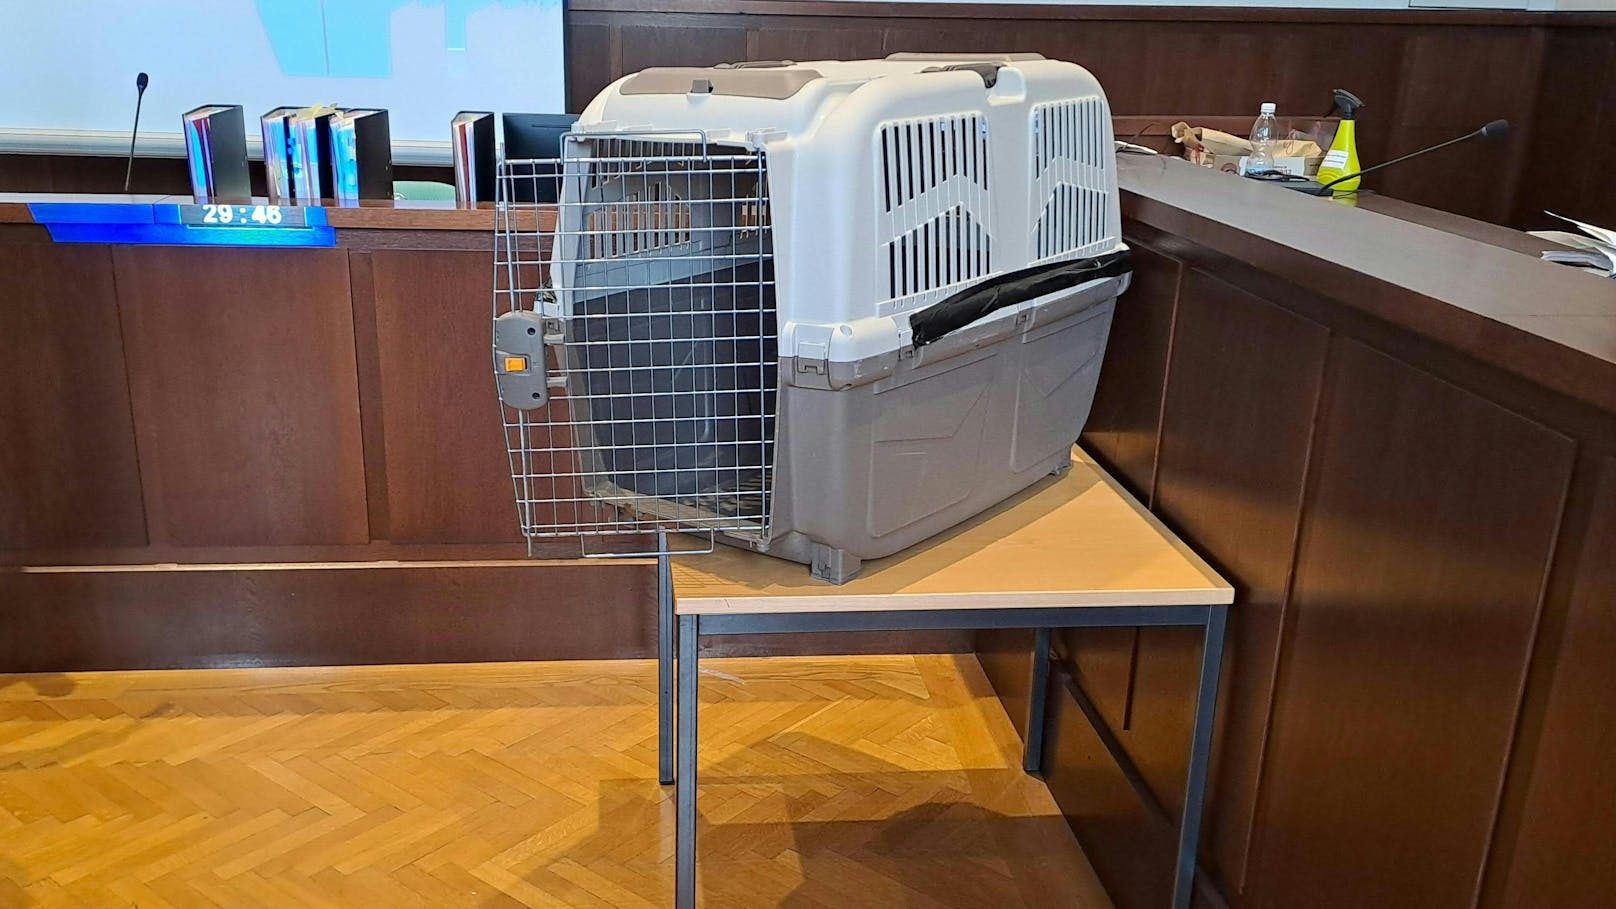 Bub in Hundebox – Opferanwalt fordert nun 150.000 Euro